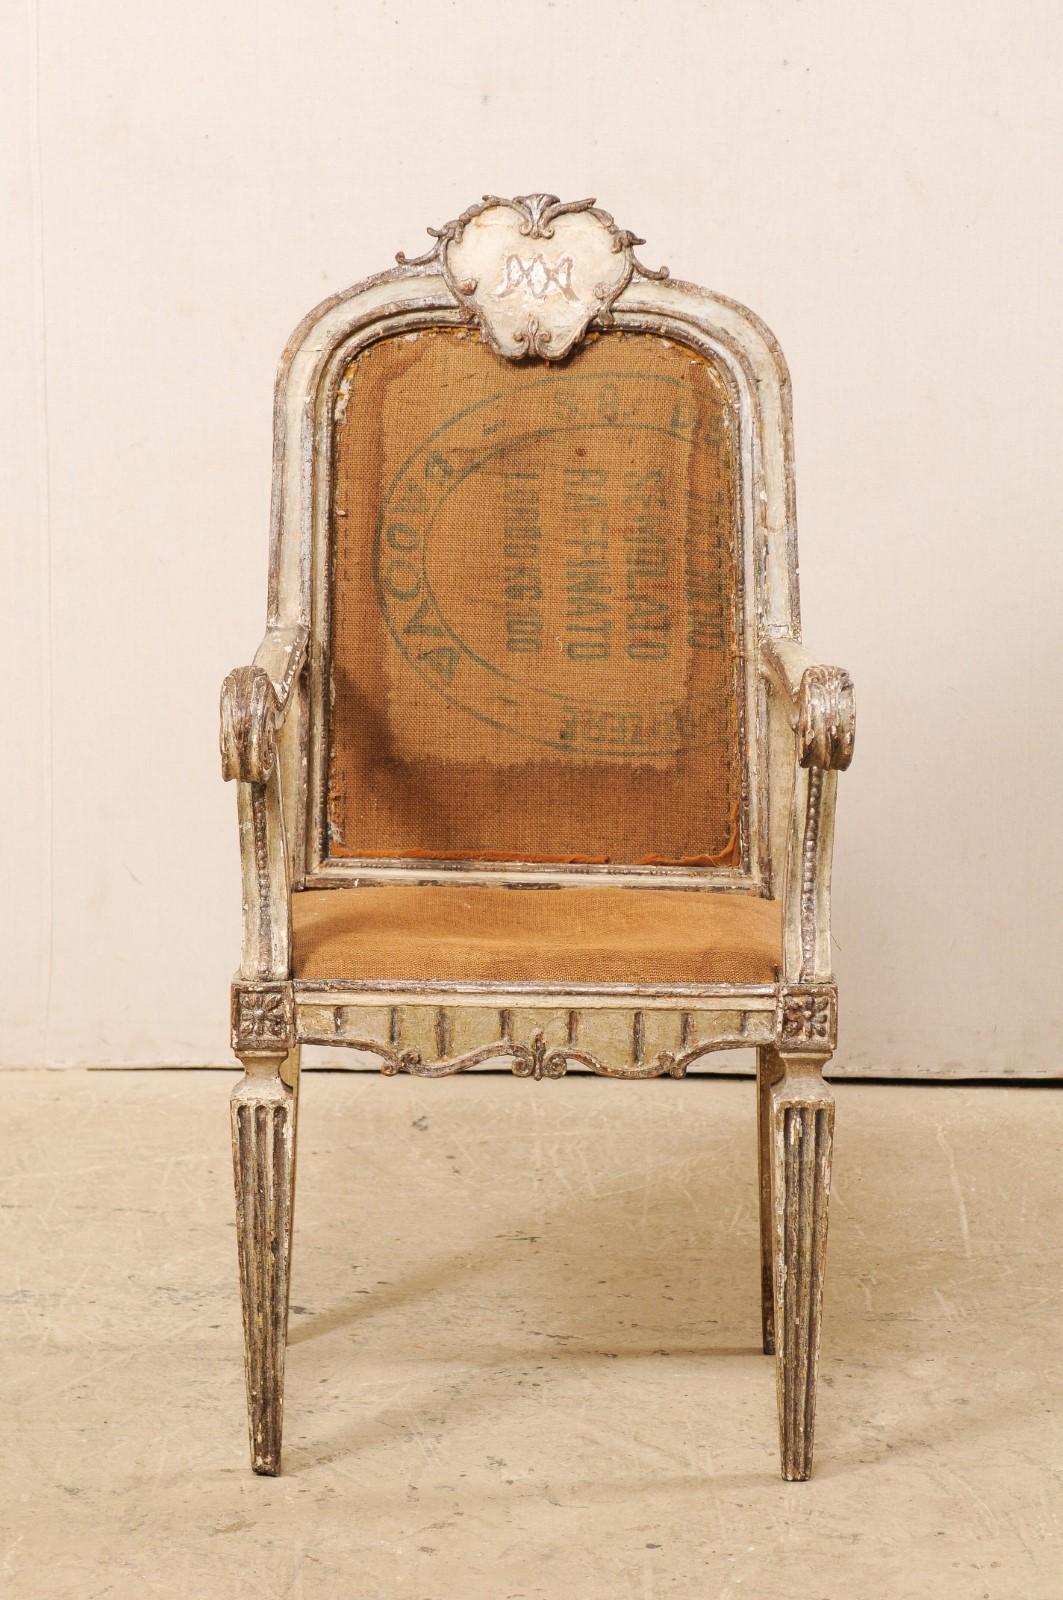 18th century chair